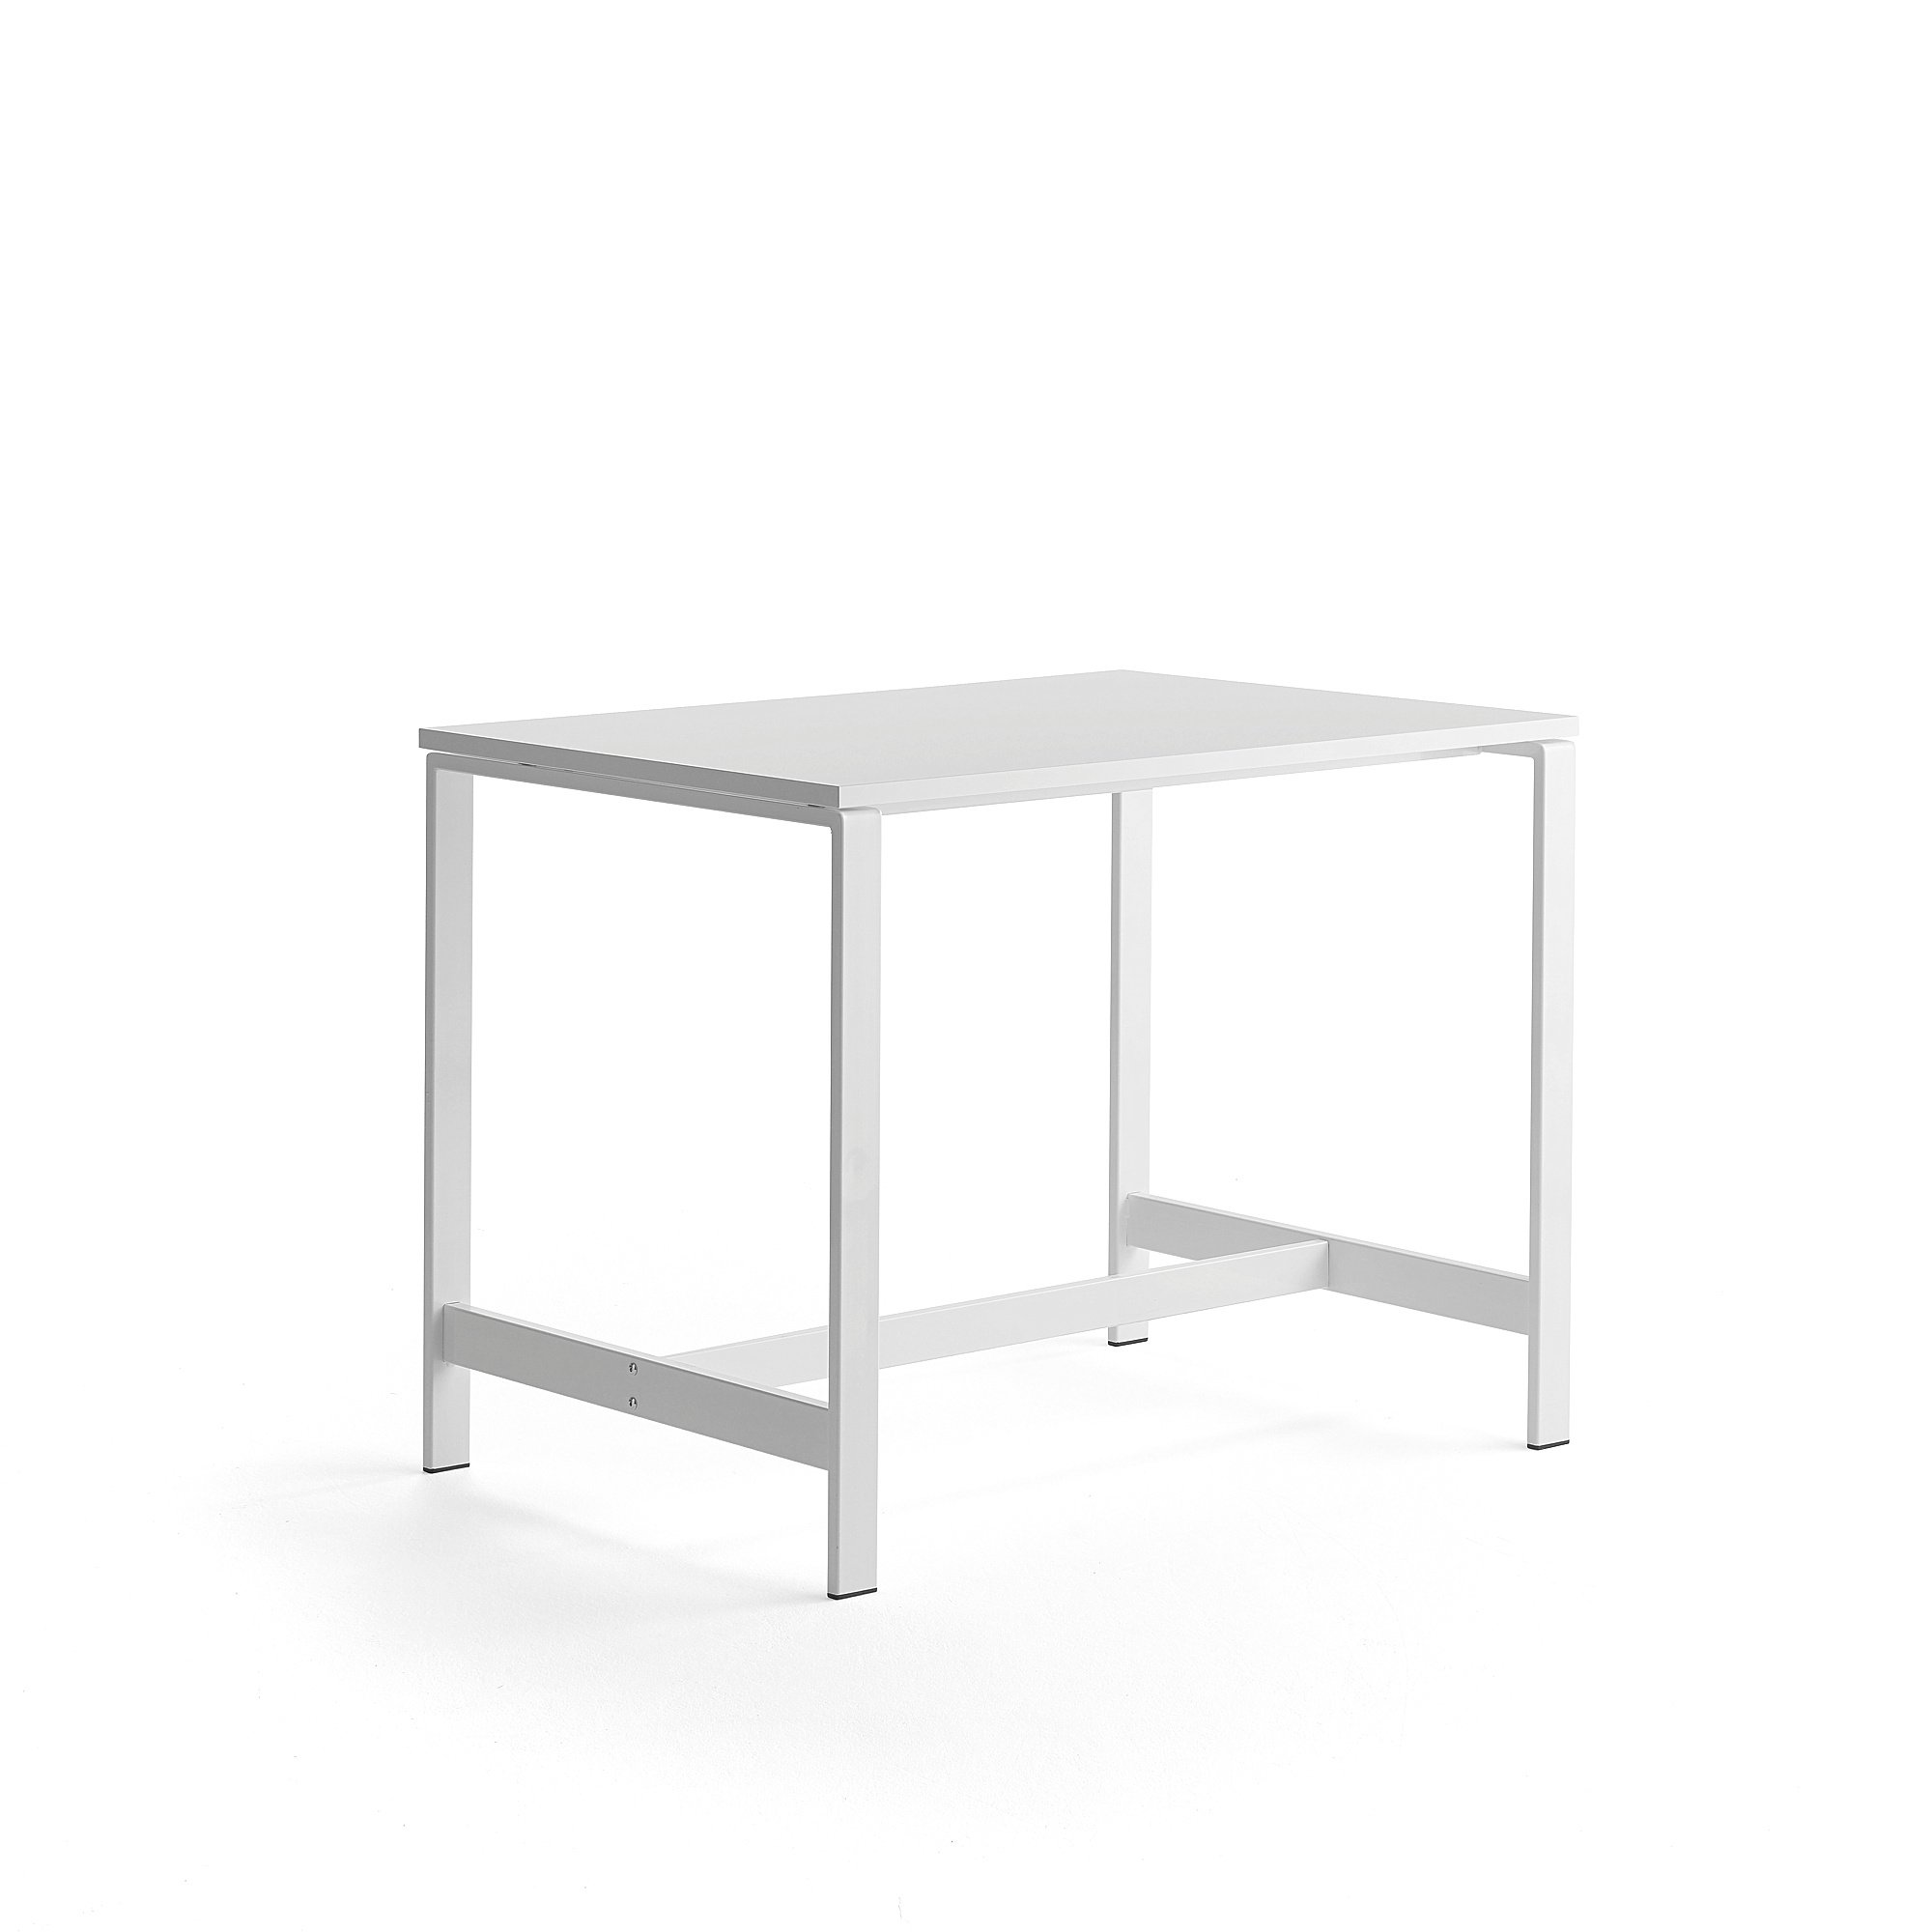 Stůl VARIOUS, 1200x800 mm, výška 900 mm, bílé nohy, bílá